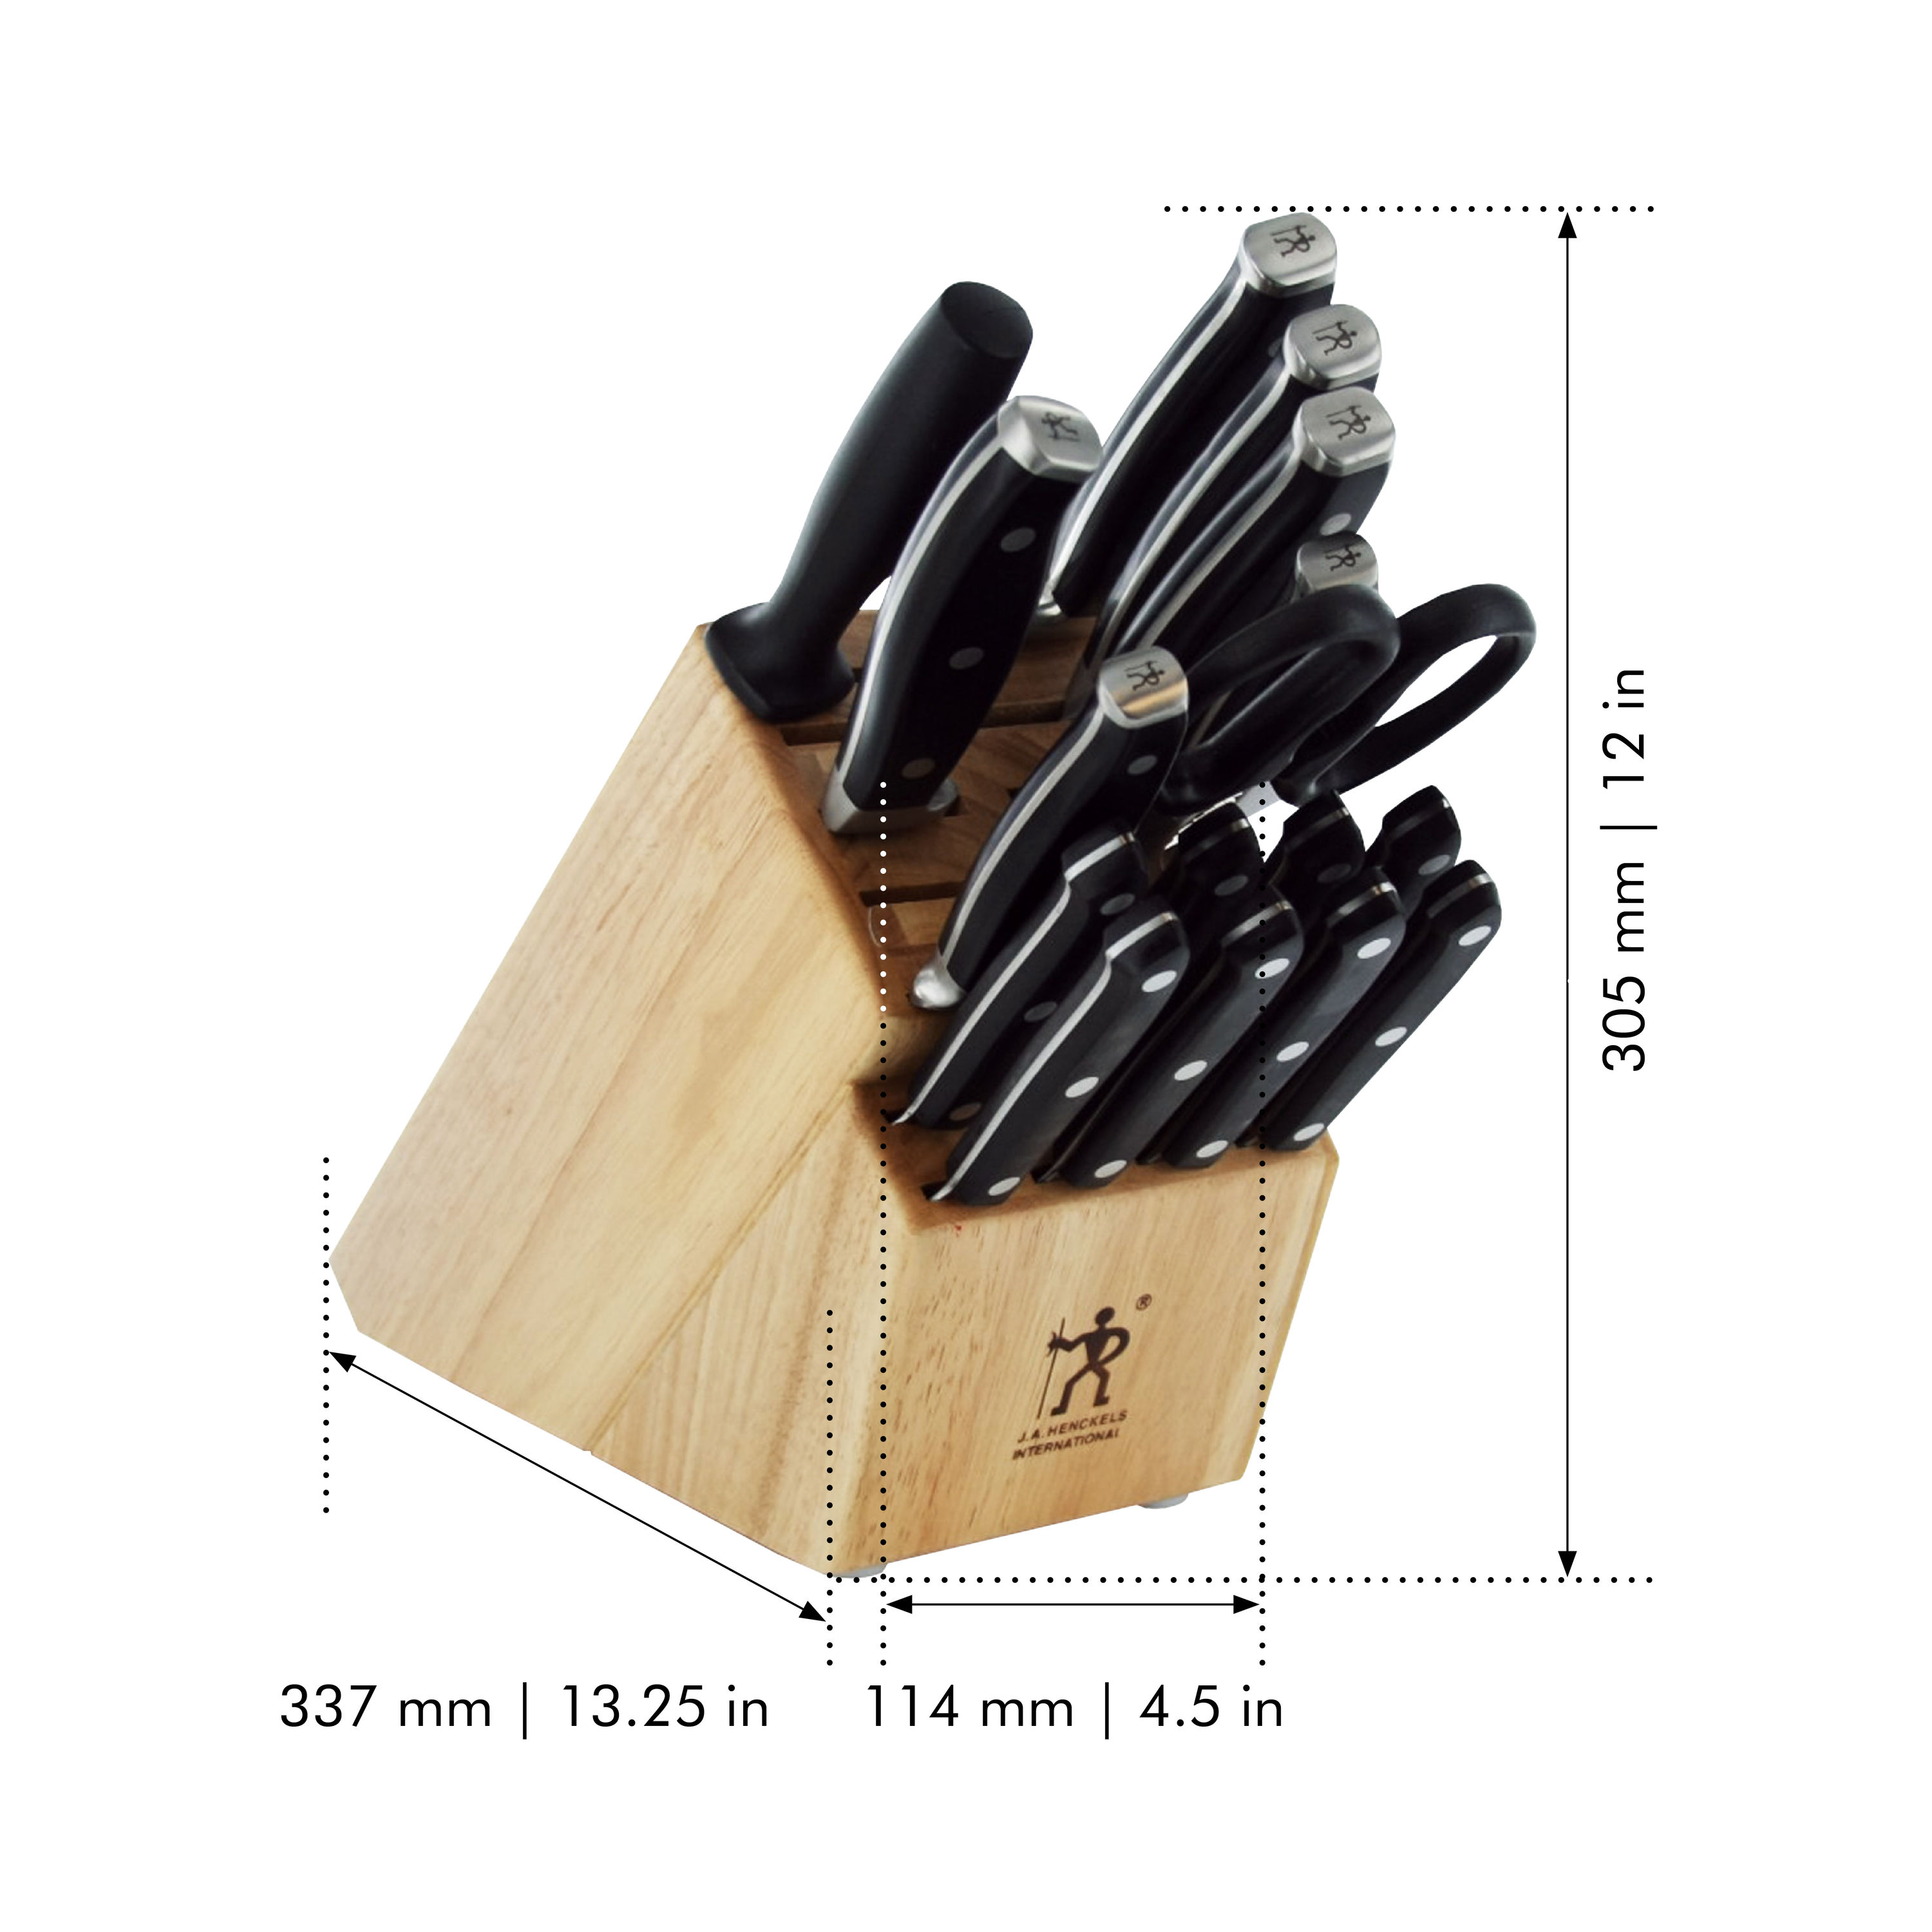 4 Pcs 4 x 6 Boning/Steak Knife Set in A Gift Box, Black ABS|Gunter Wilhelm